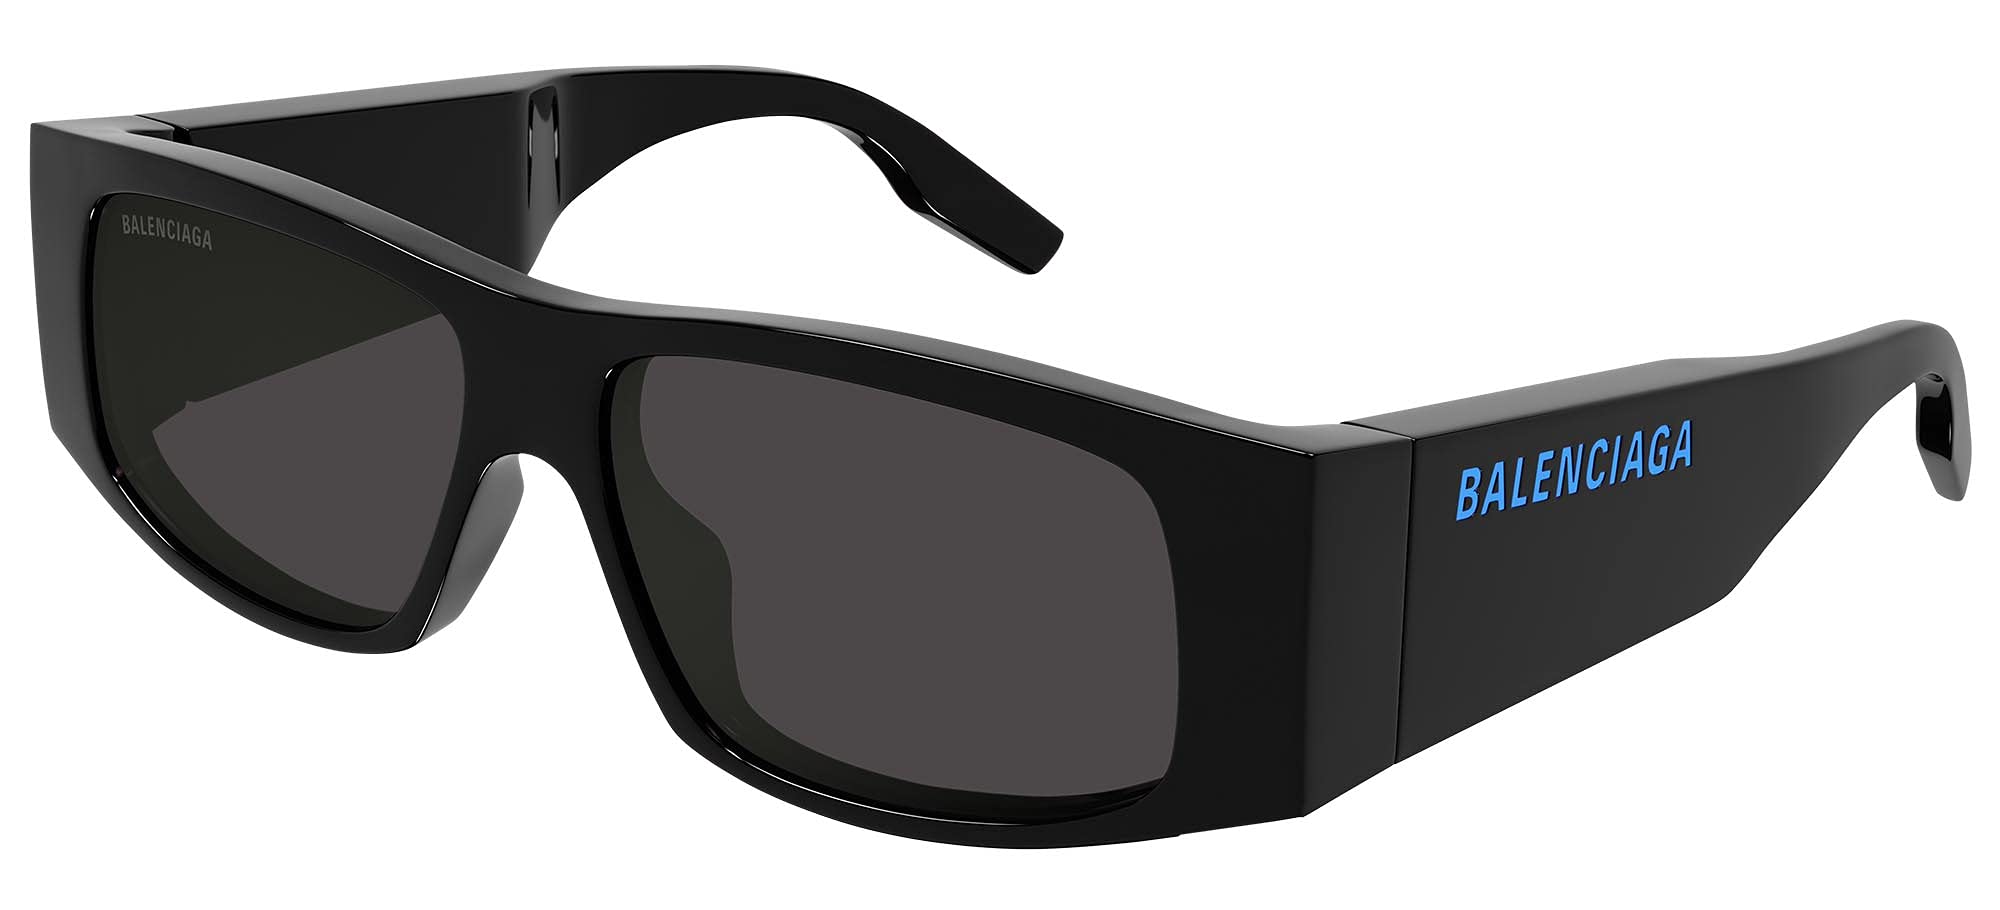 New cat eye sunglasses with BB logo Balenciaga BB0095S Dynasty col 001  black  Occhiali  Ottica Scauzillo